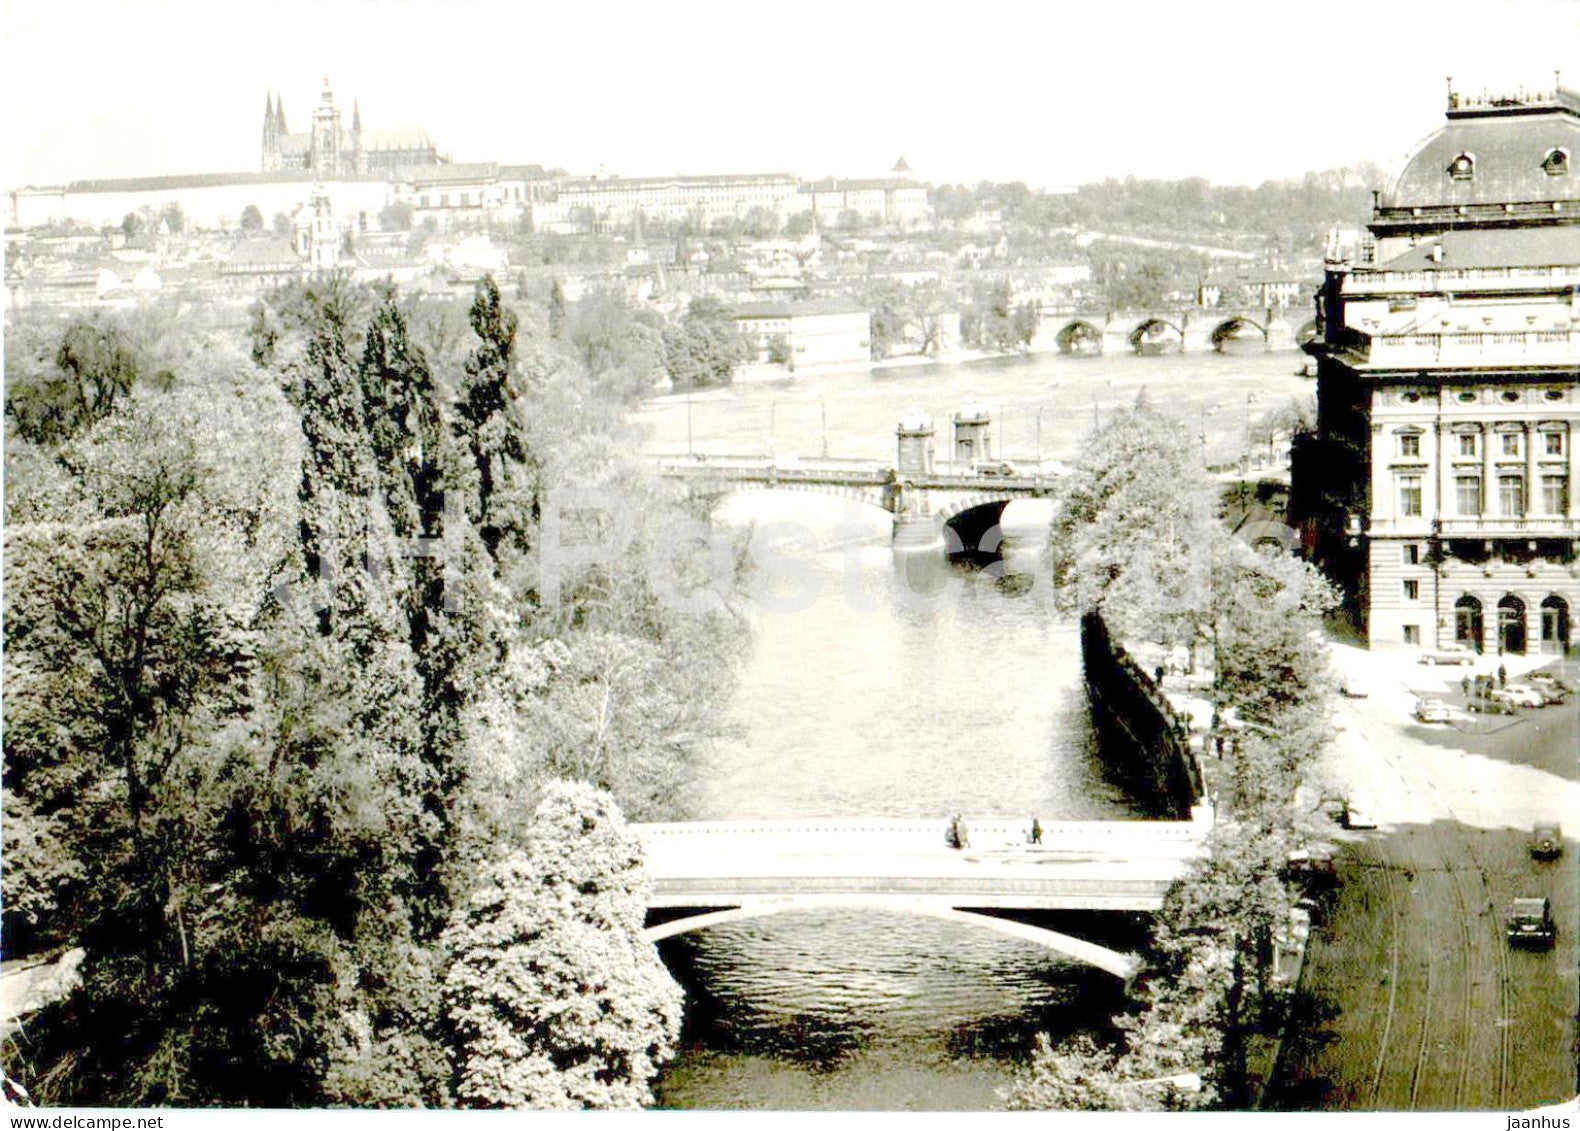 Praha - Prague - The Castle of Prague Hradcany and National Theatre - 1968 - Czech Republic - Czechoslovakia - used - JH Postcards